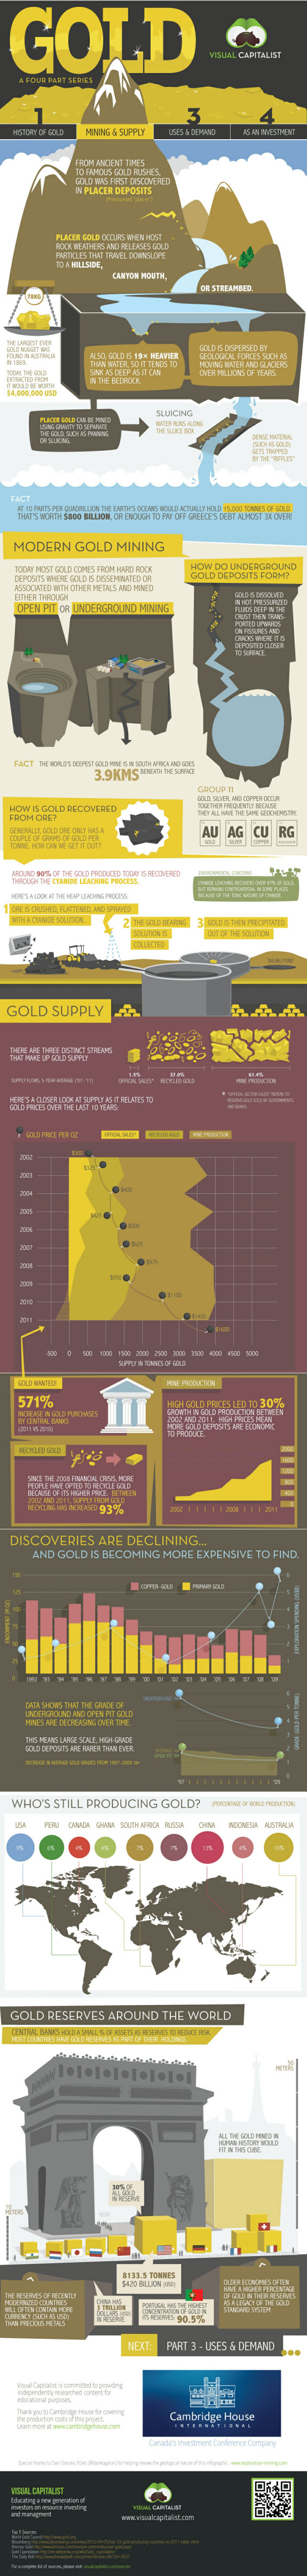 http://news.goldseek.com/2012/gold-mining-supply-infographic-2.jpg